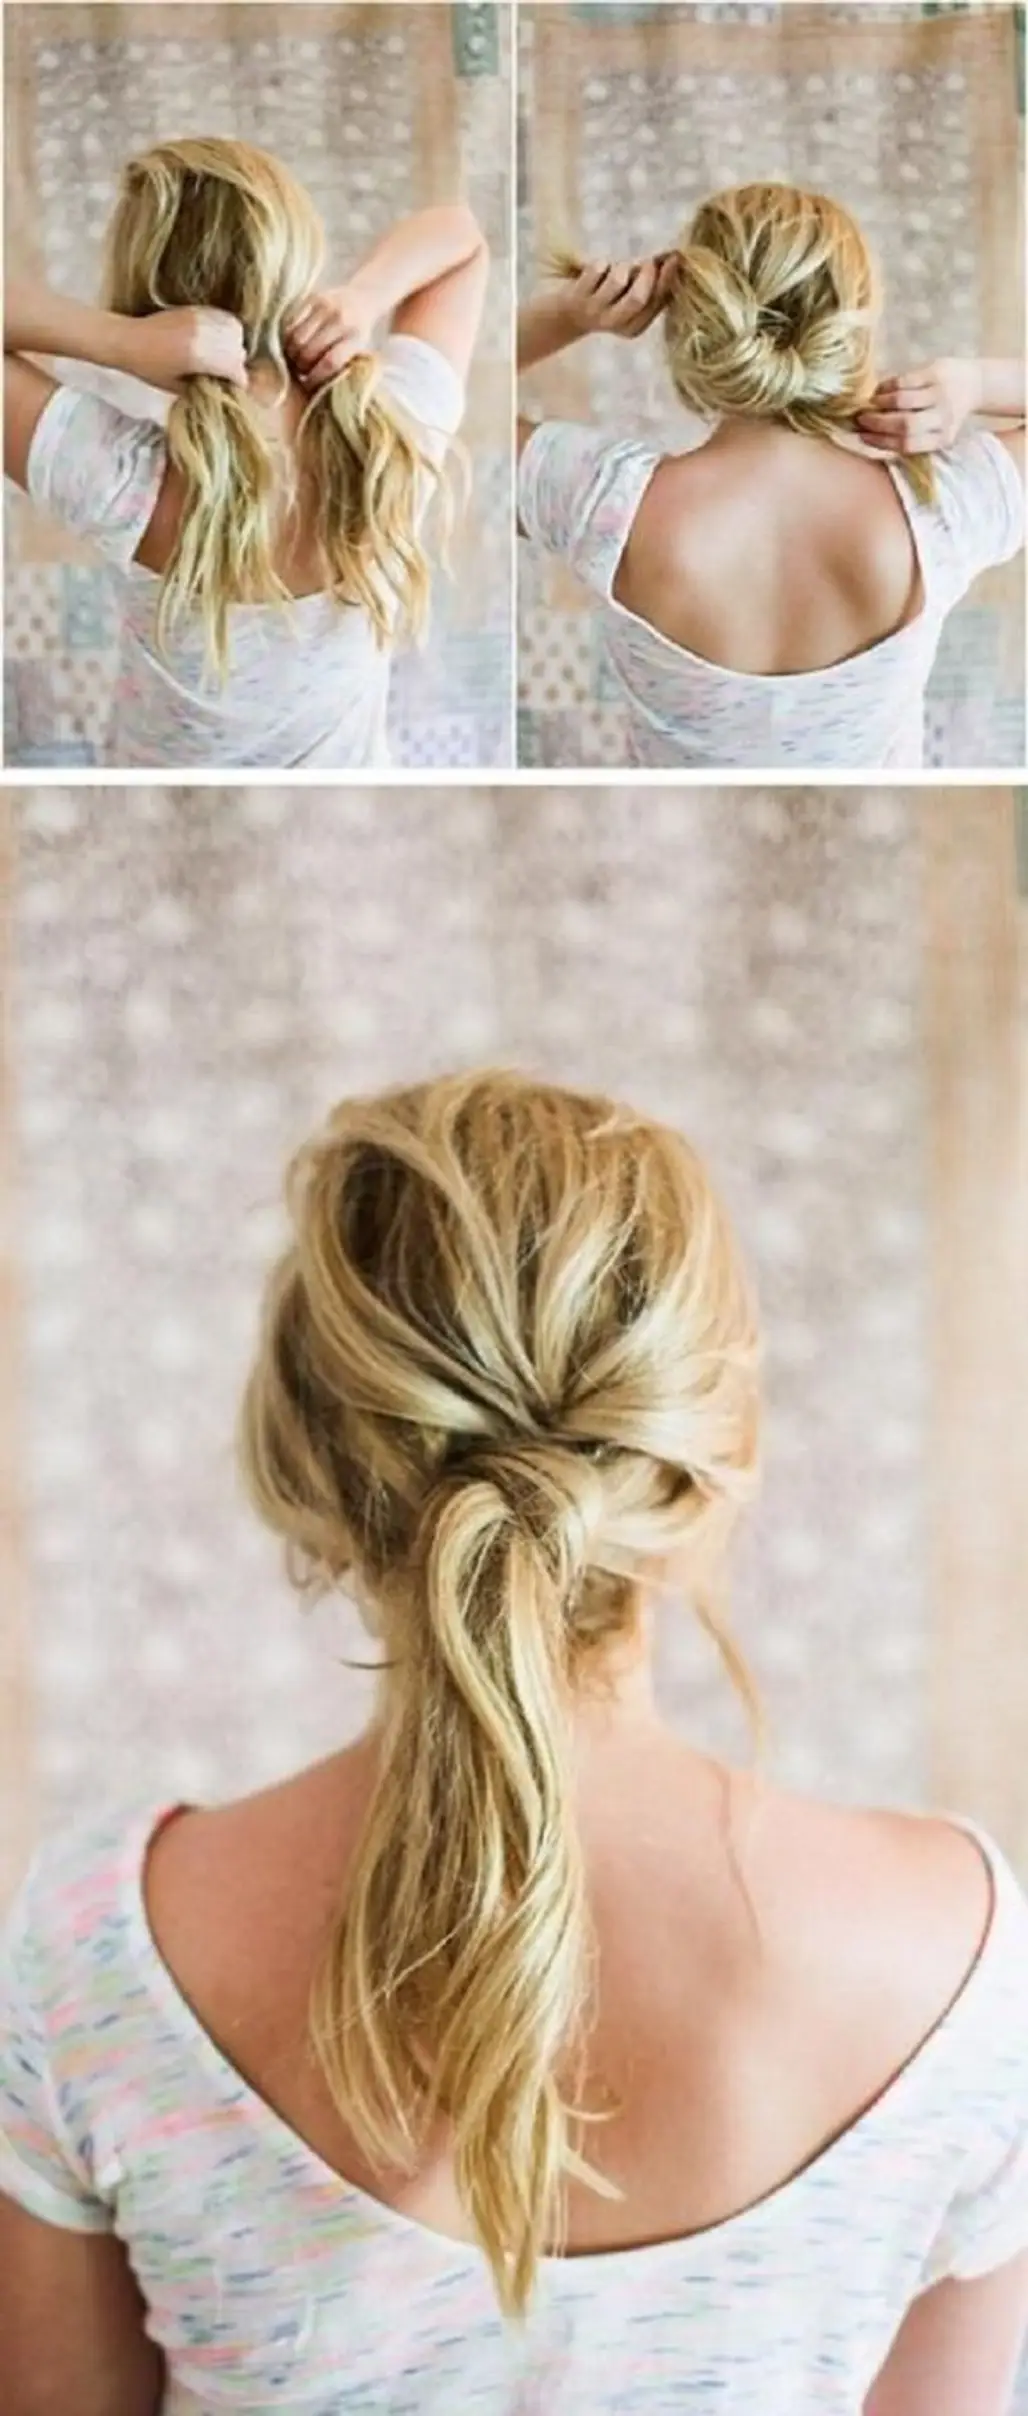 hair,hairstyle,blond,long hair,wedding dress,